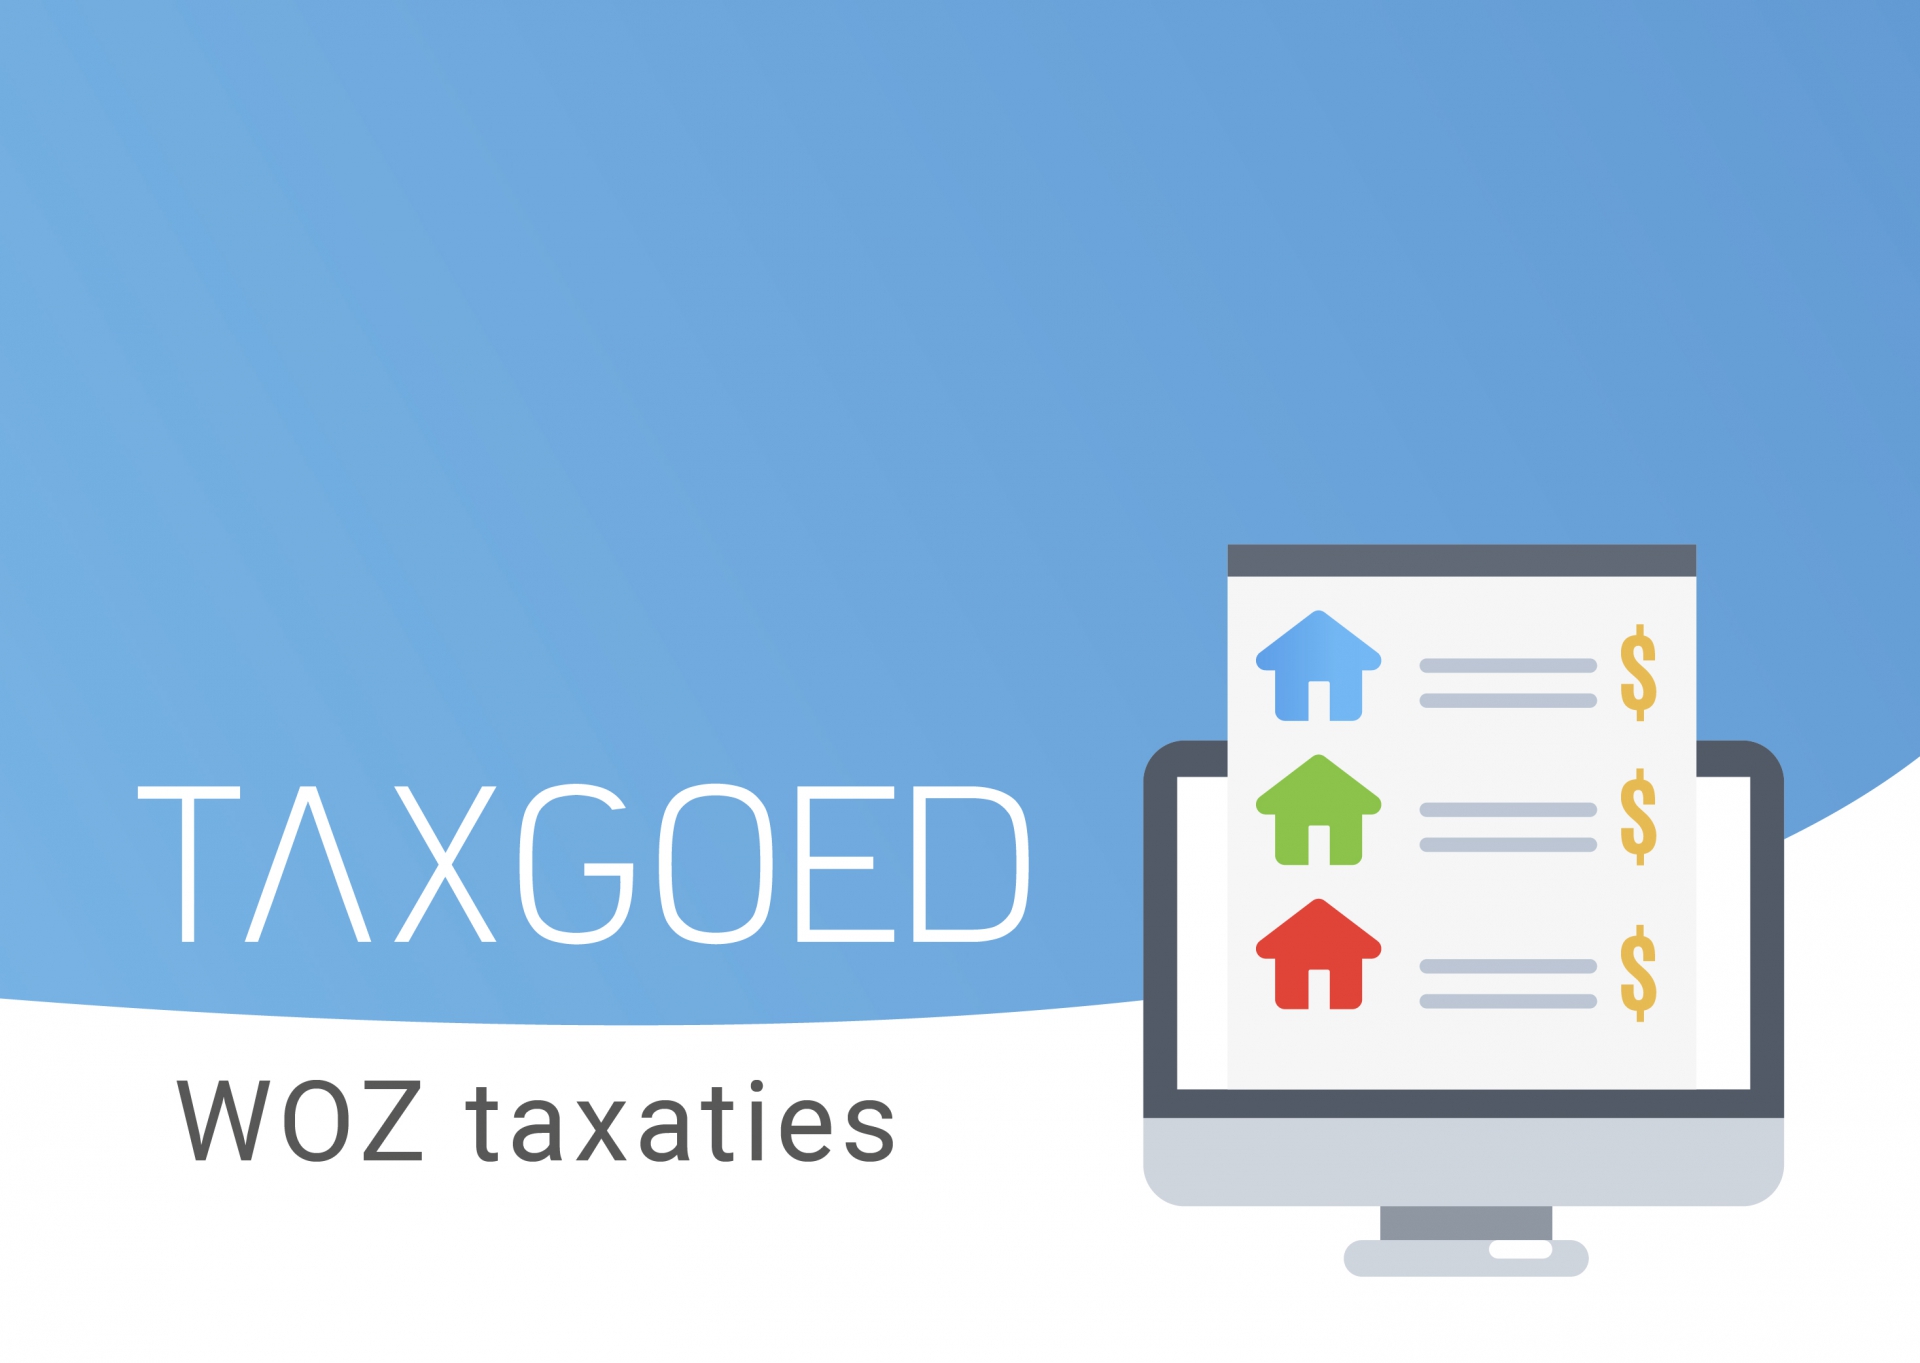 WOZ taxaties via Taxgoed